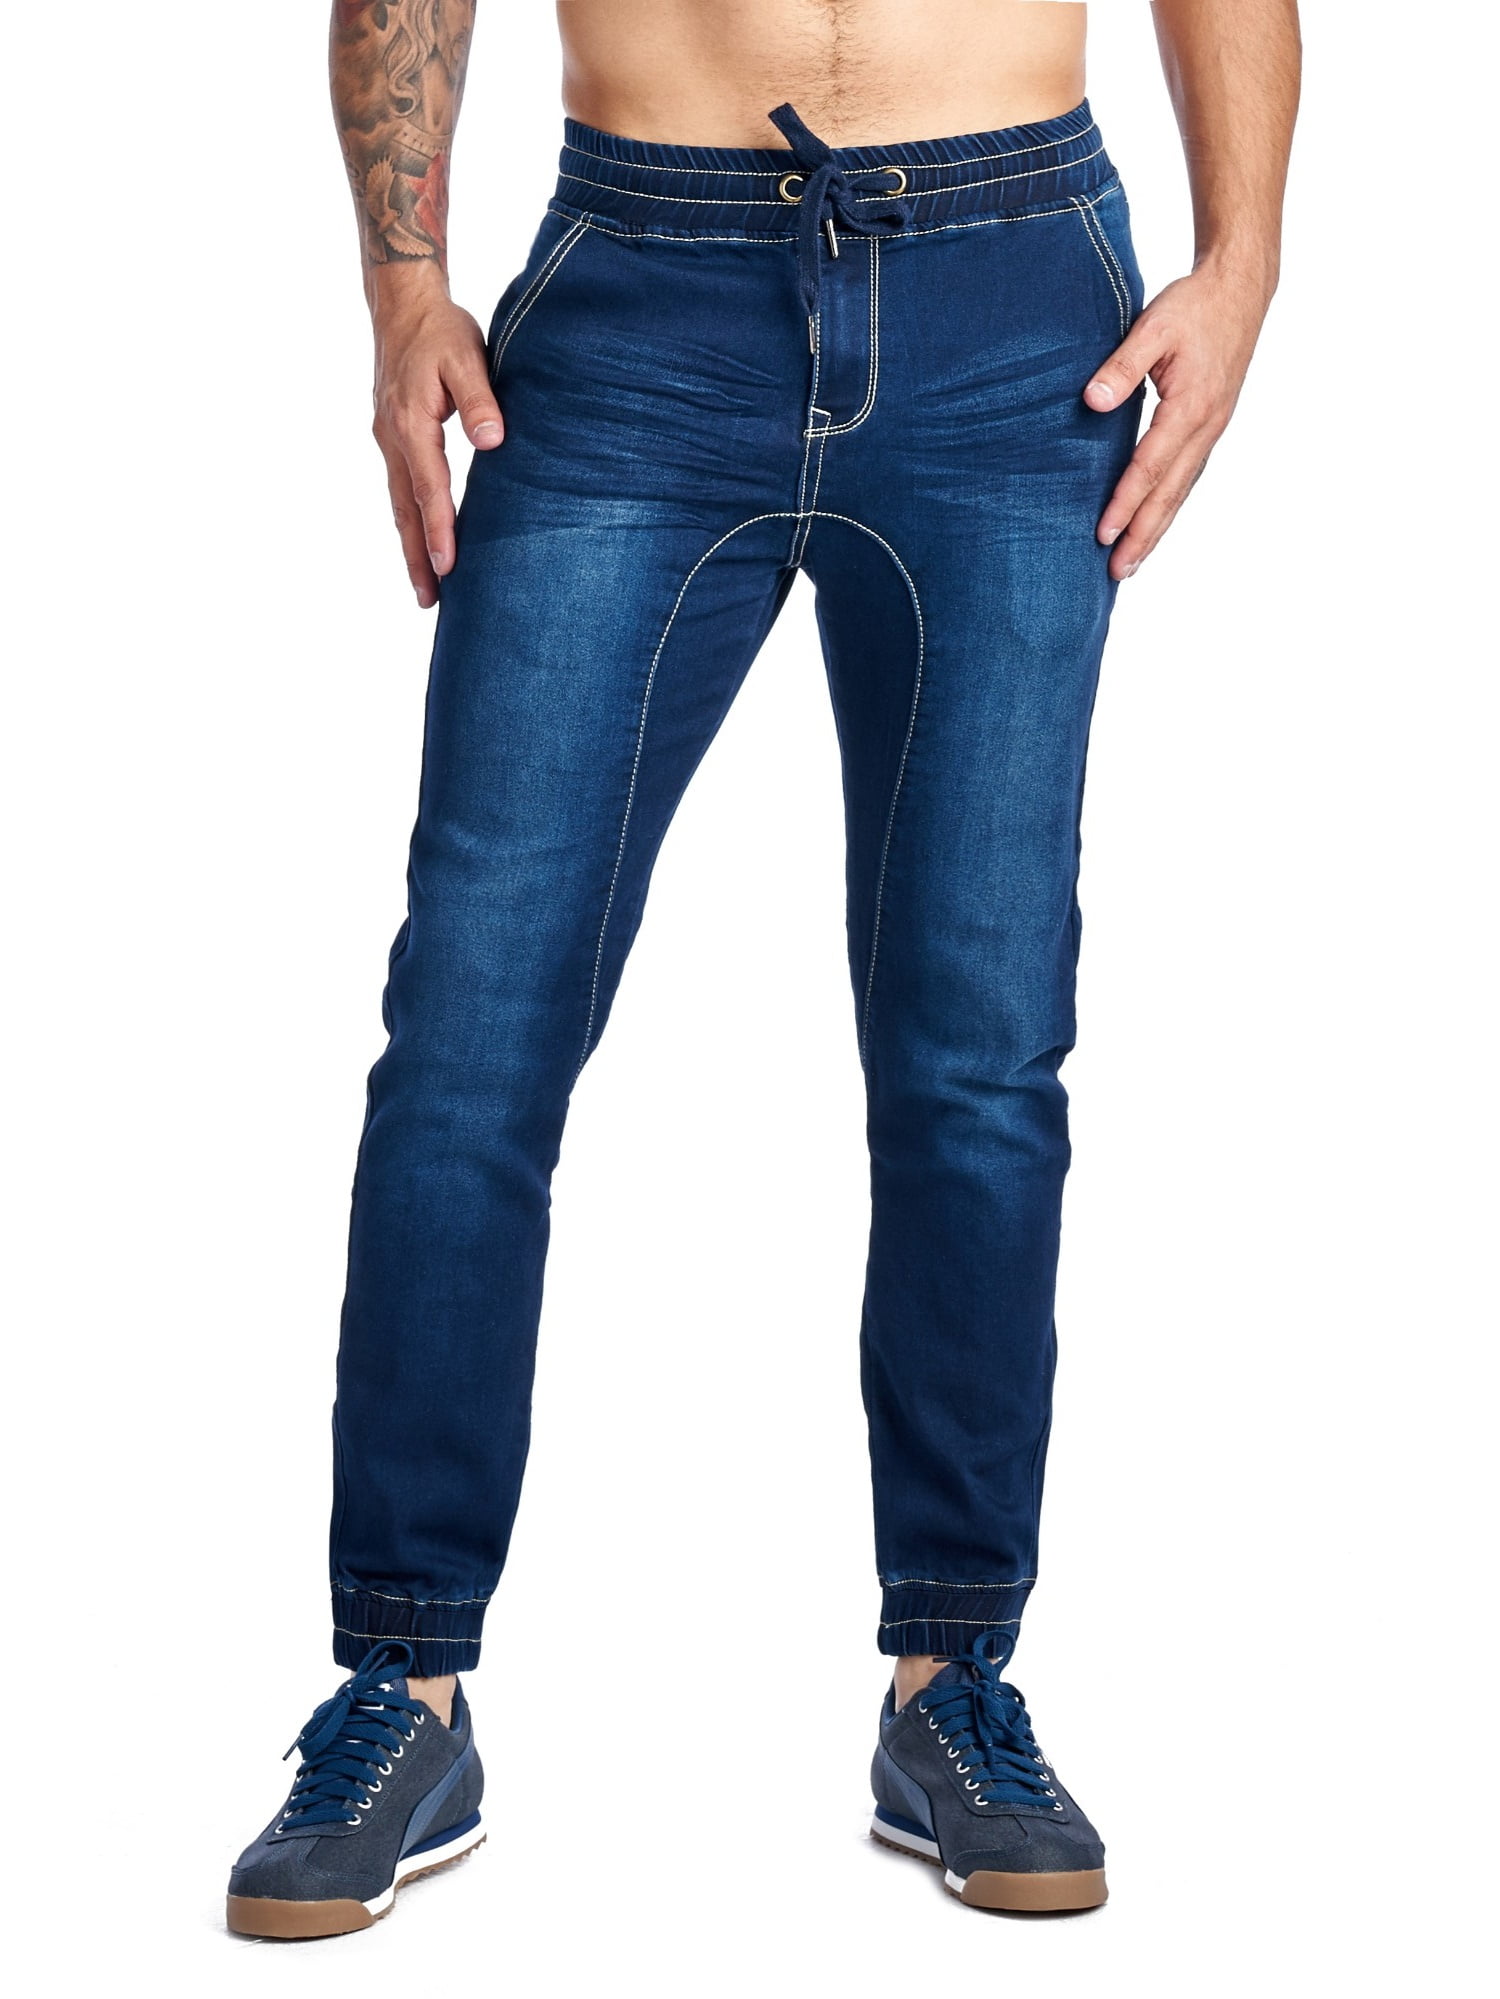 A Jeans Men's Denim Pant Jogger Styling Slim Fit 42120C Dark Blue Large ...